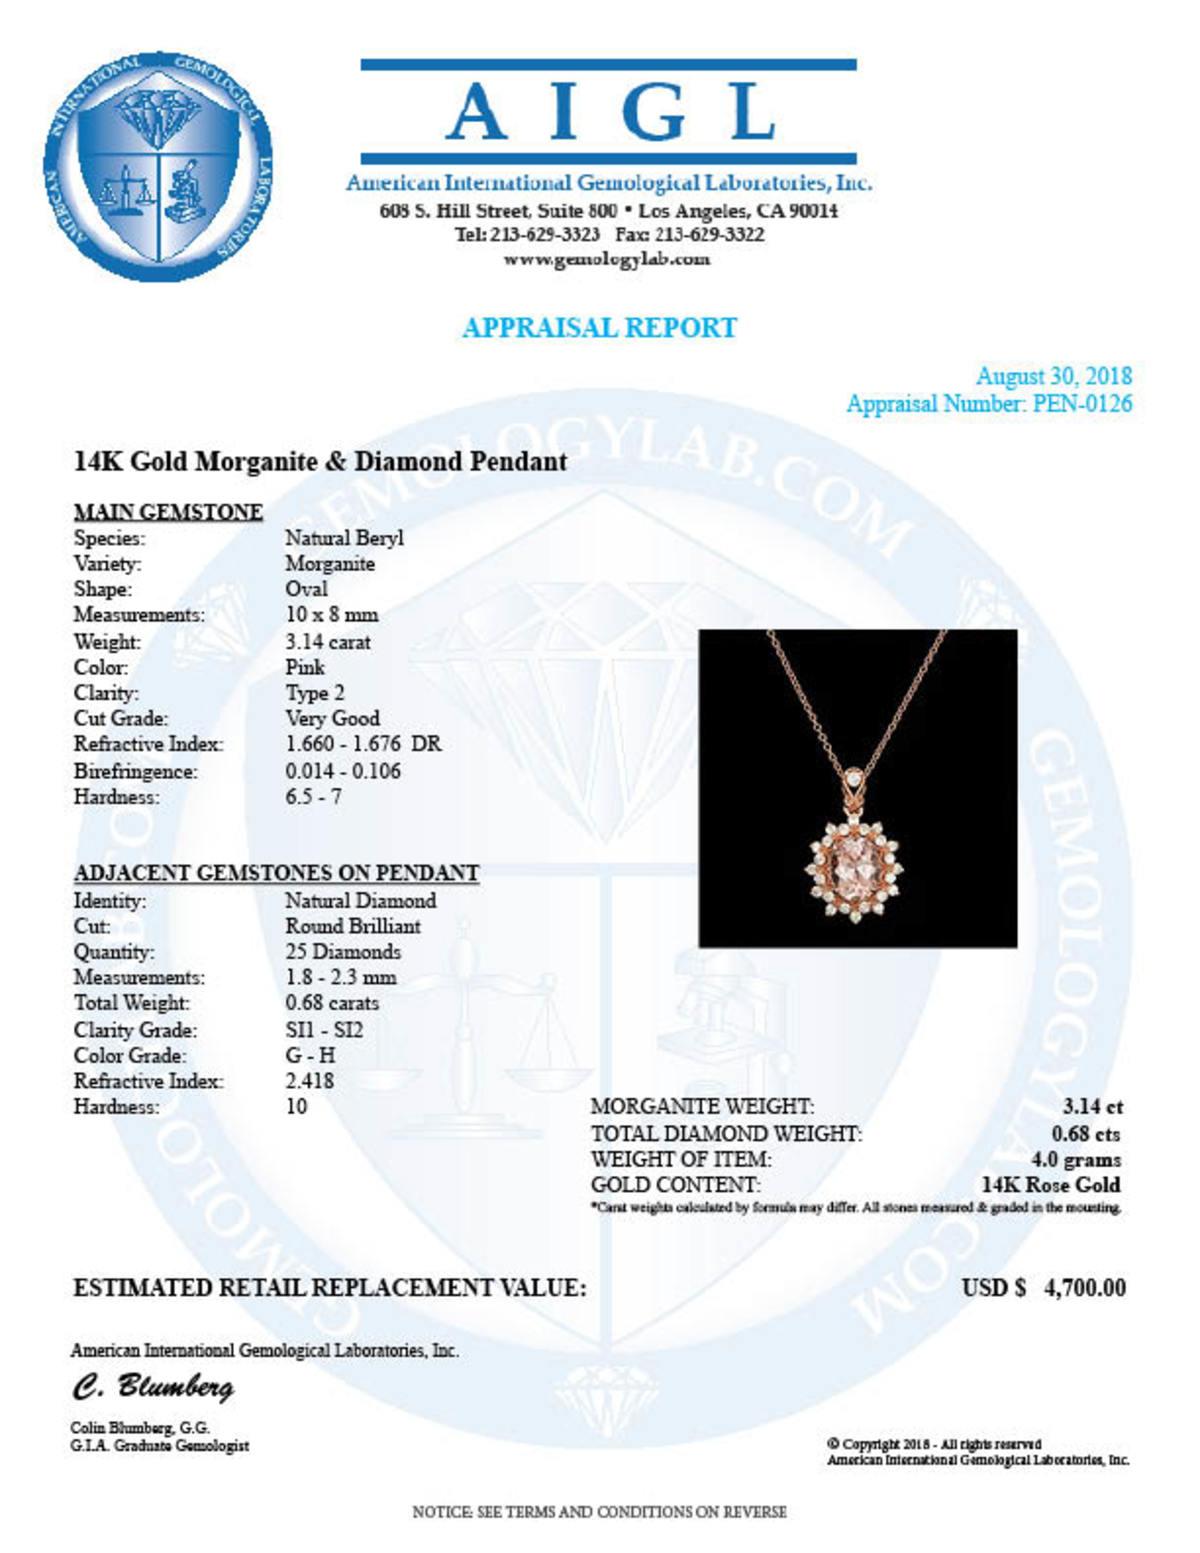 14K Gold Morganite and Diamond Pendant